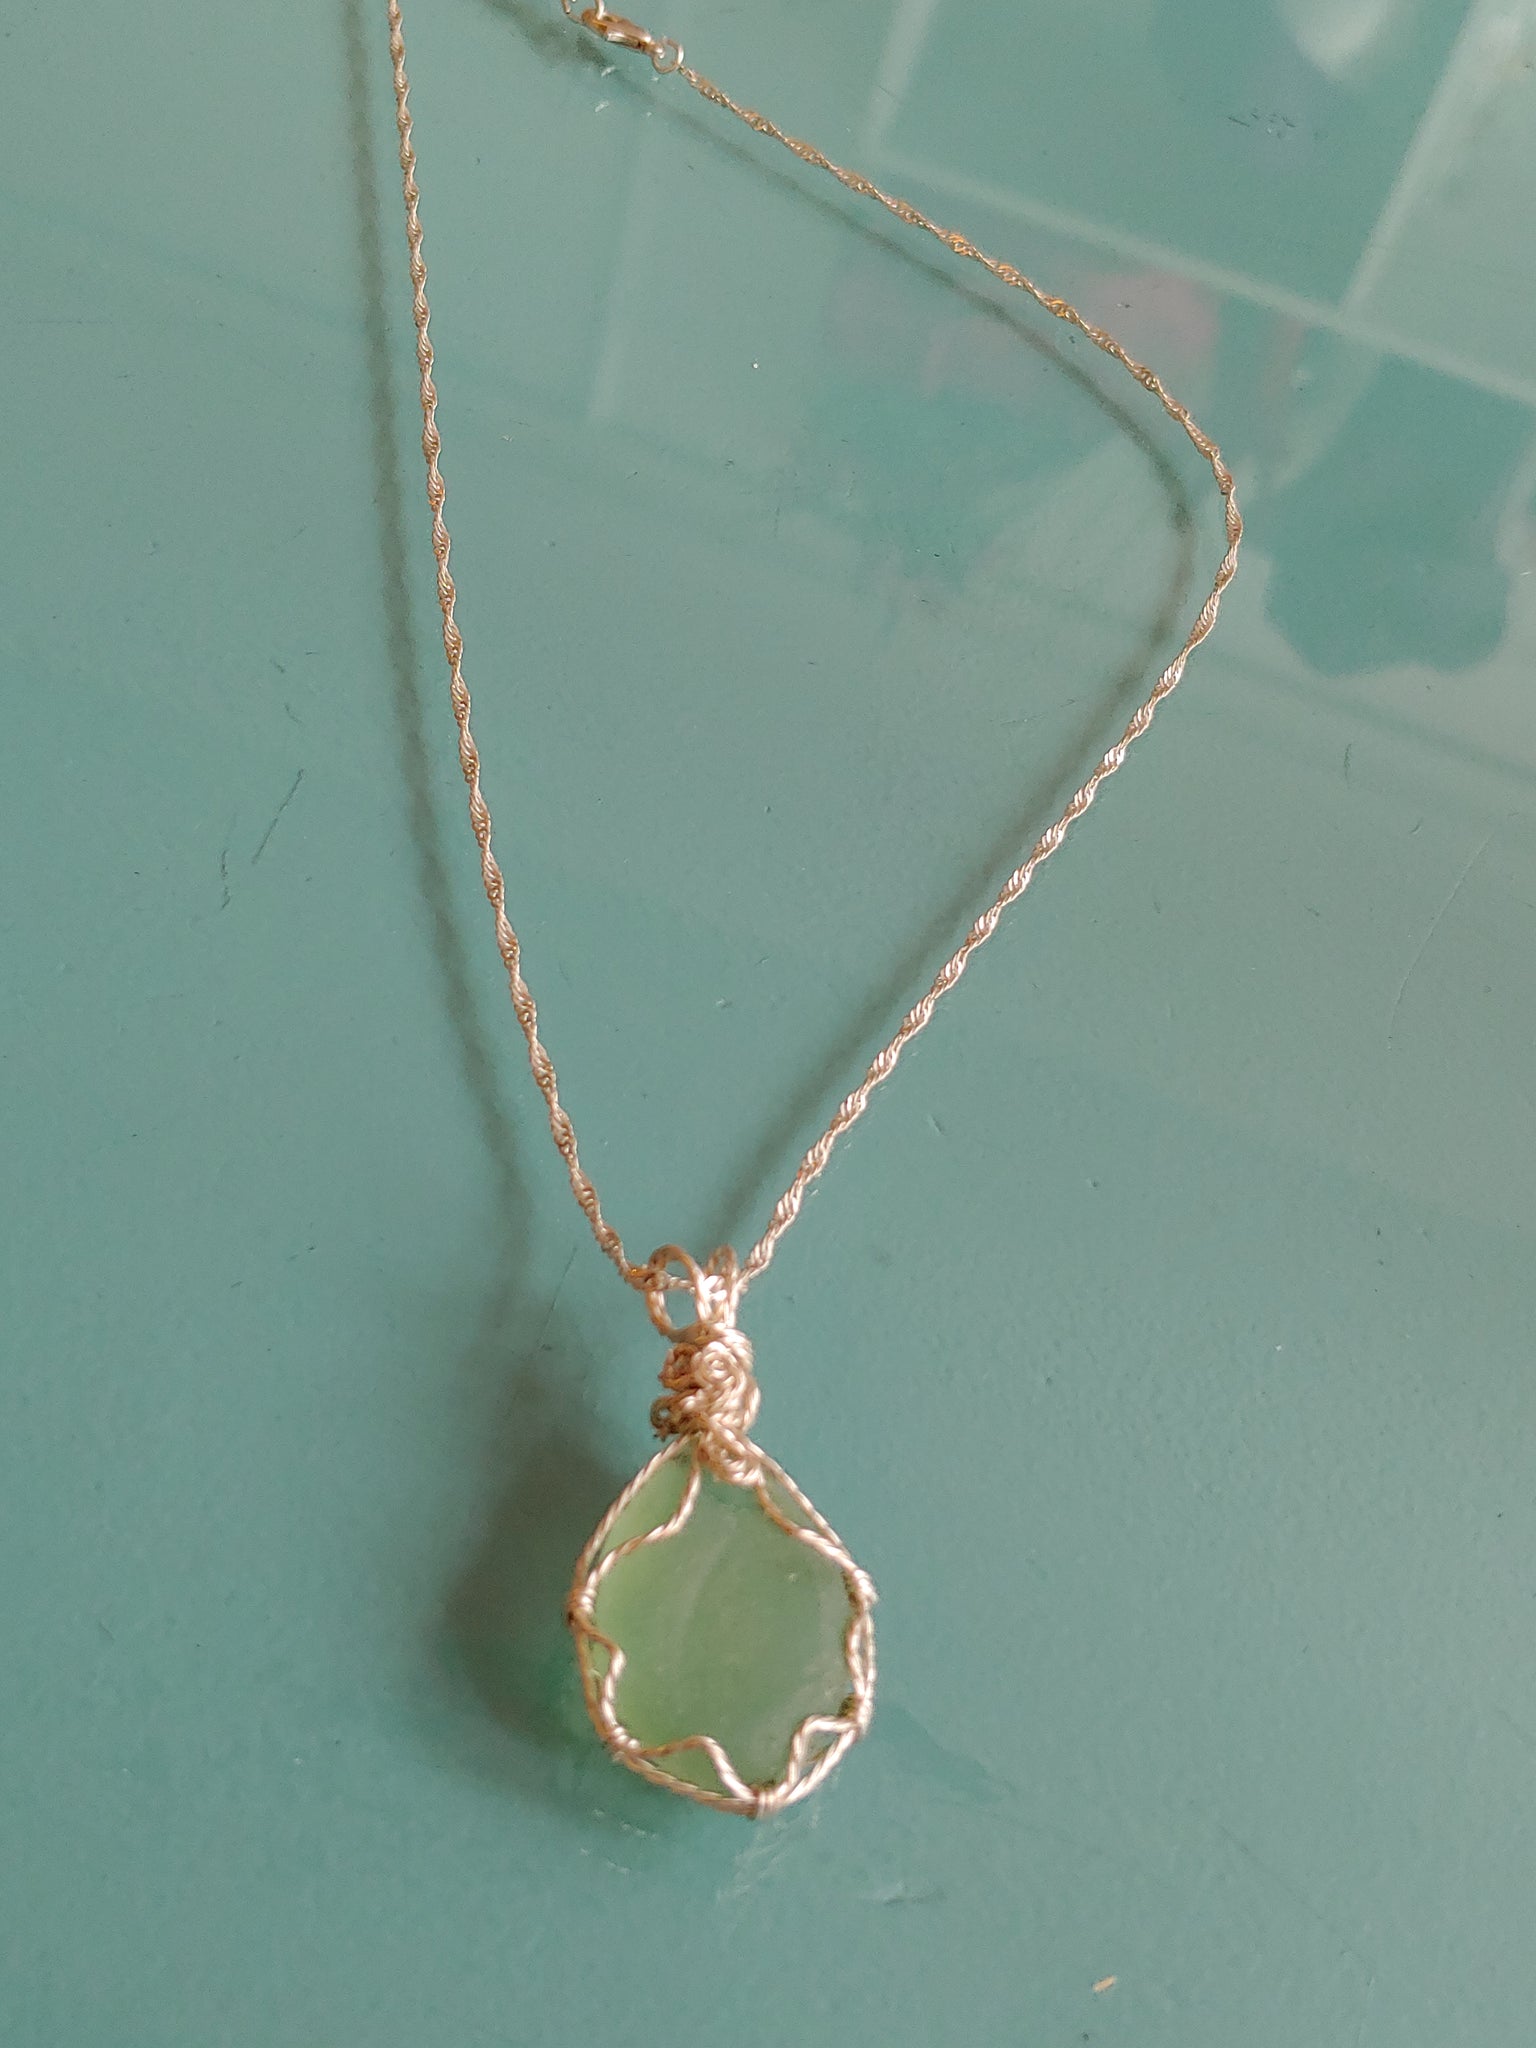 Handmade Sea Glass Necklace